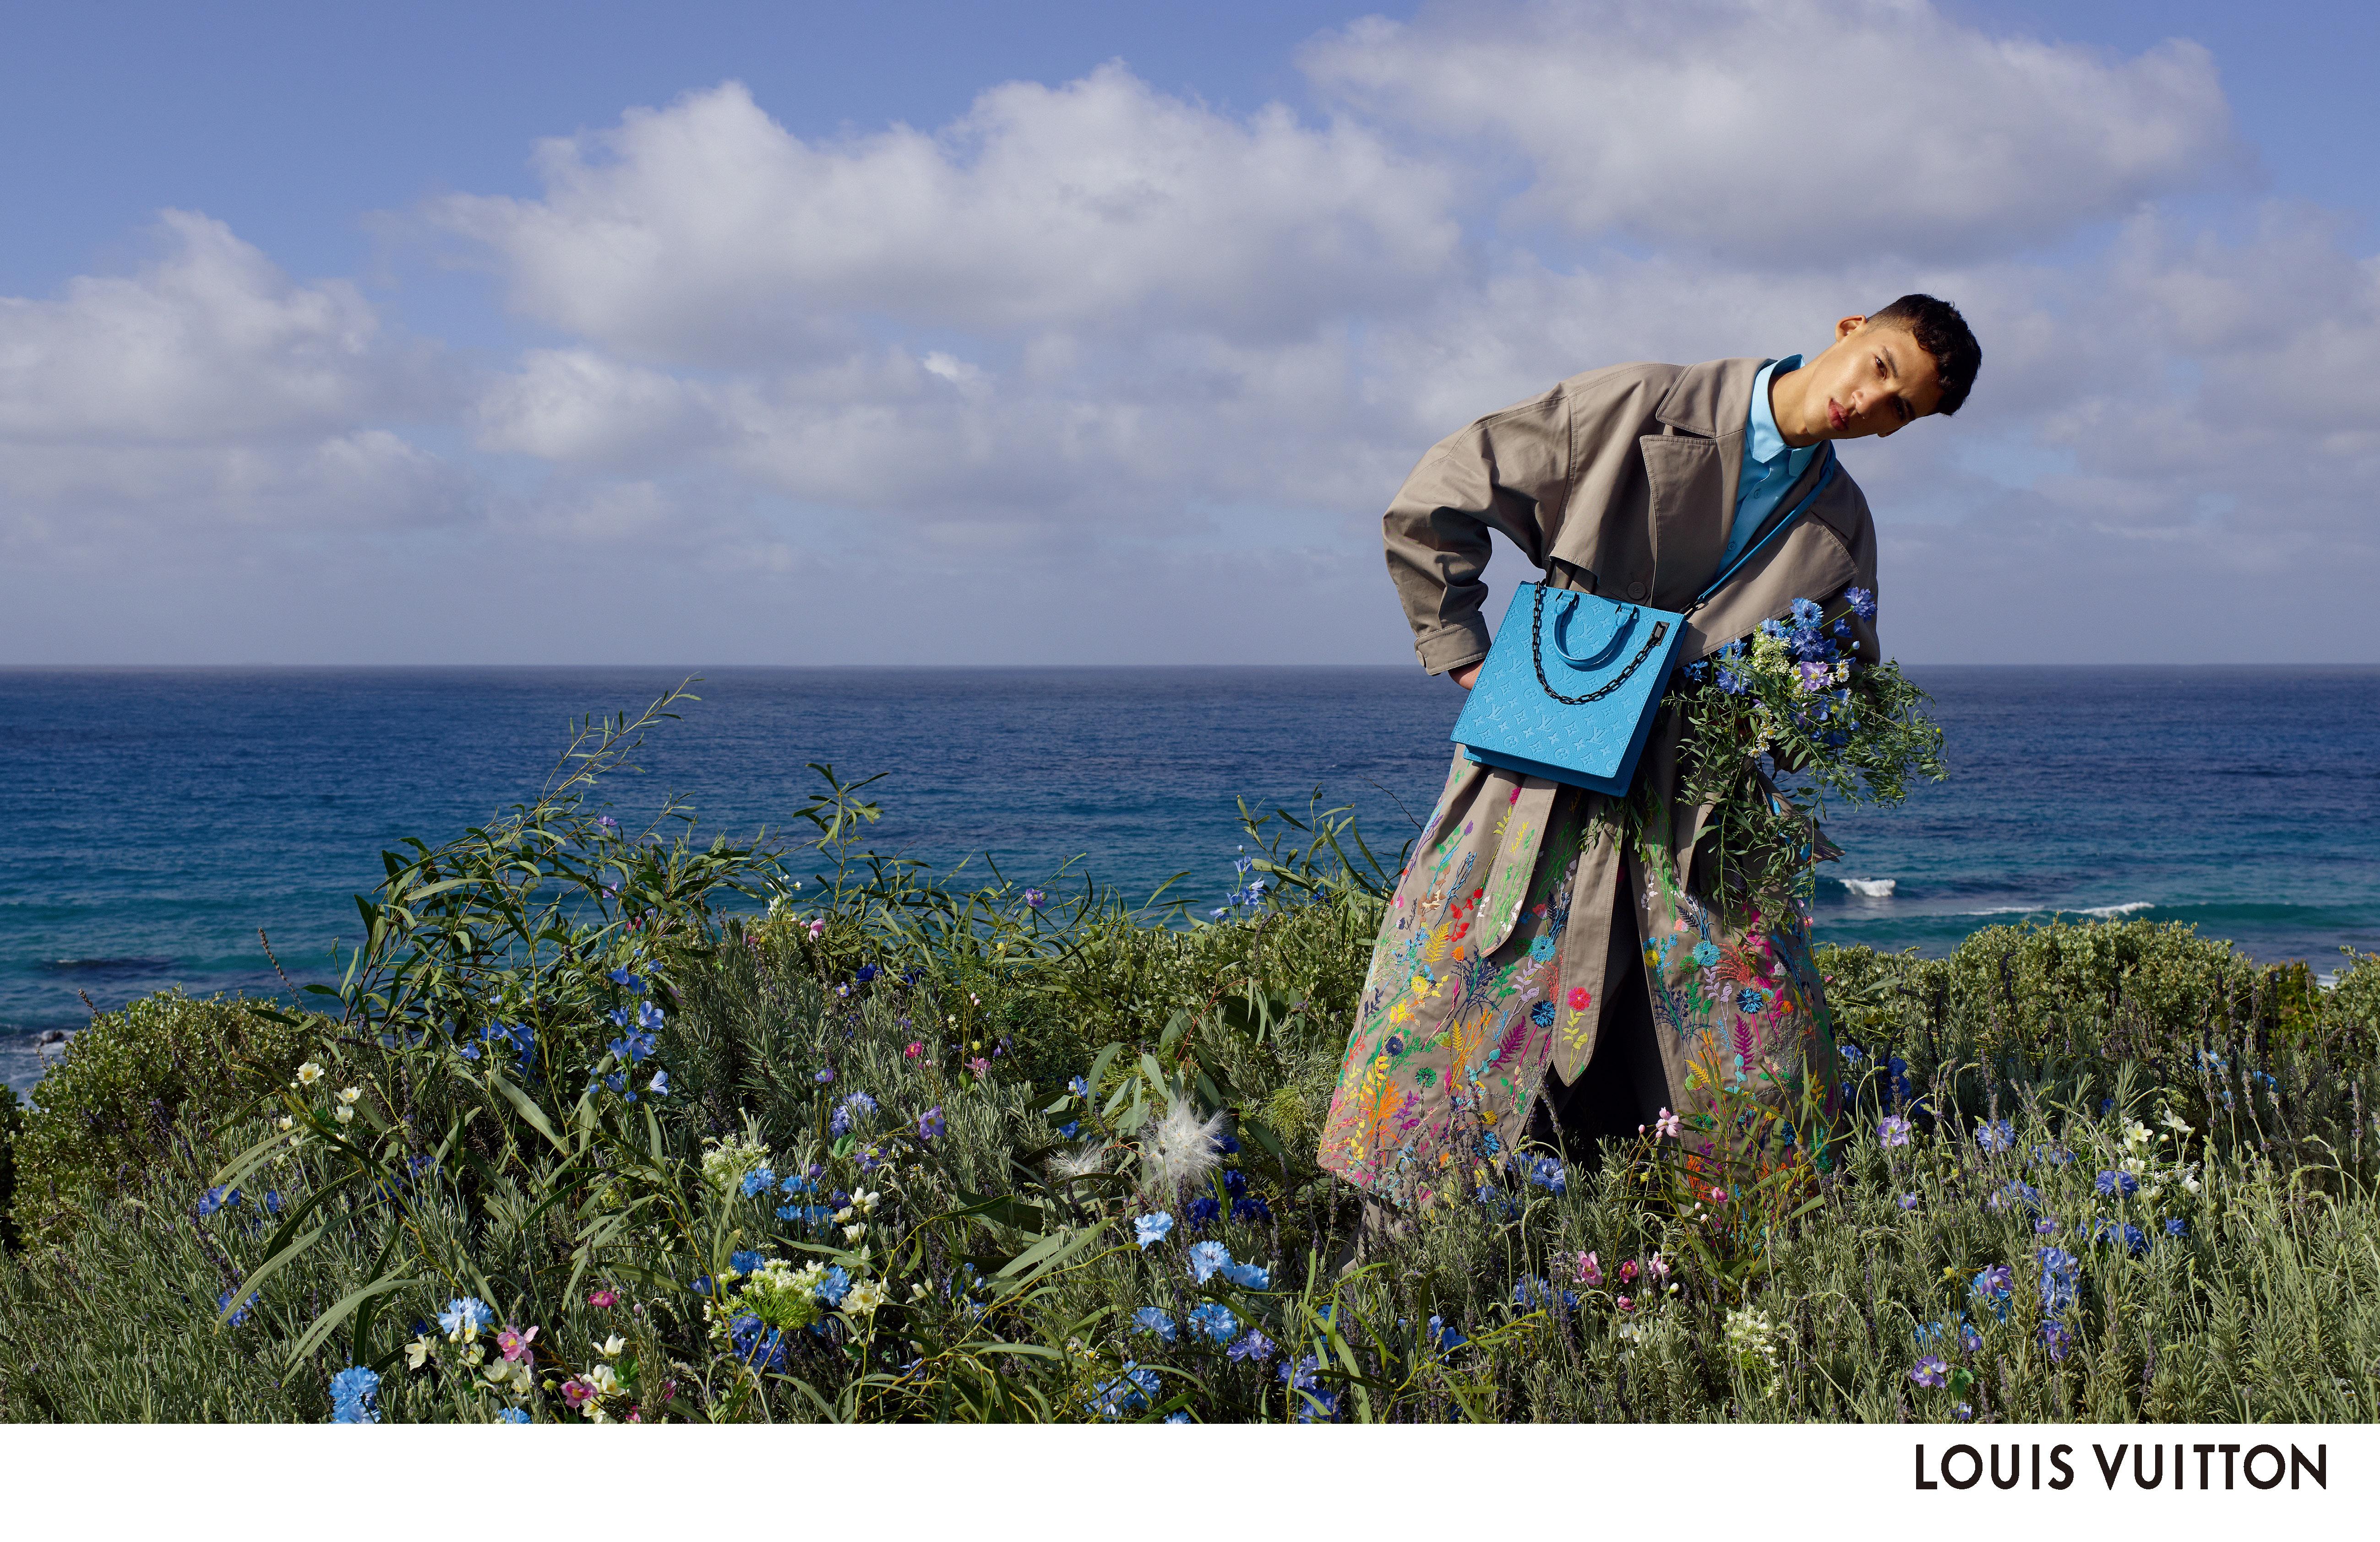 Louis Vuitton Spring 2020 Ad Campaign